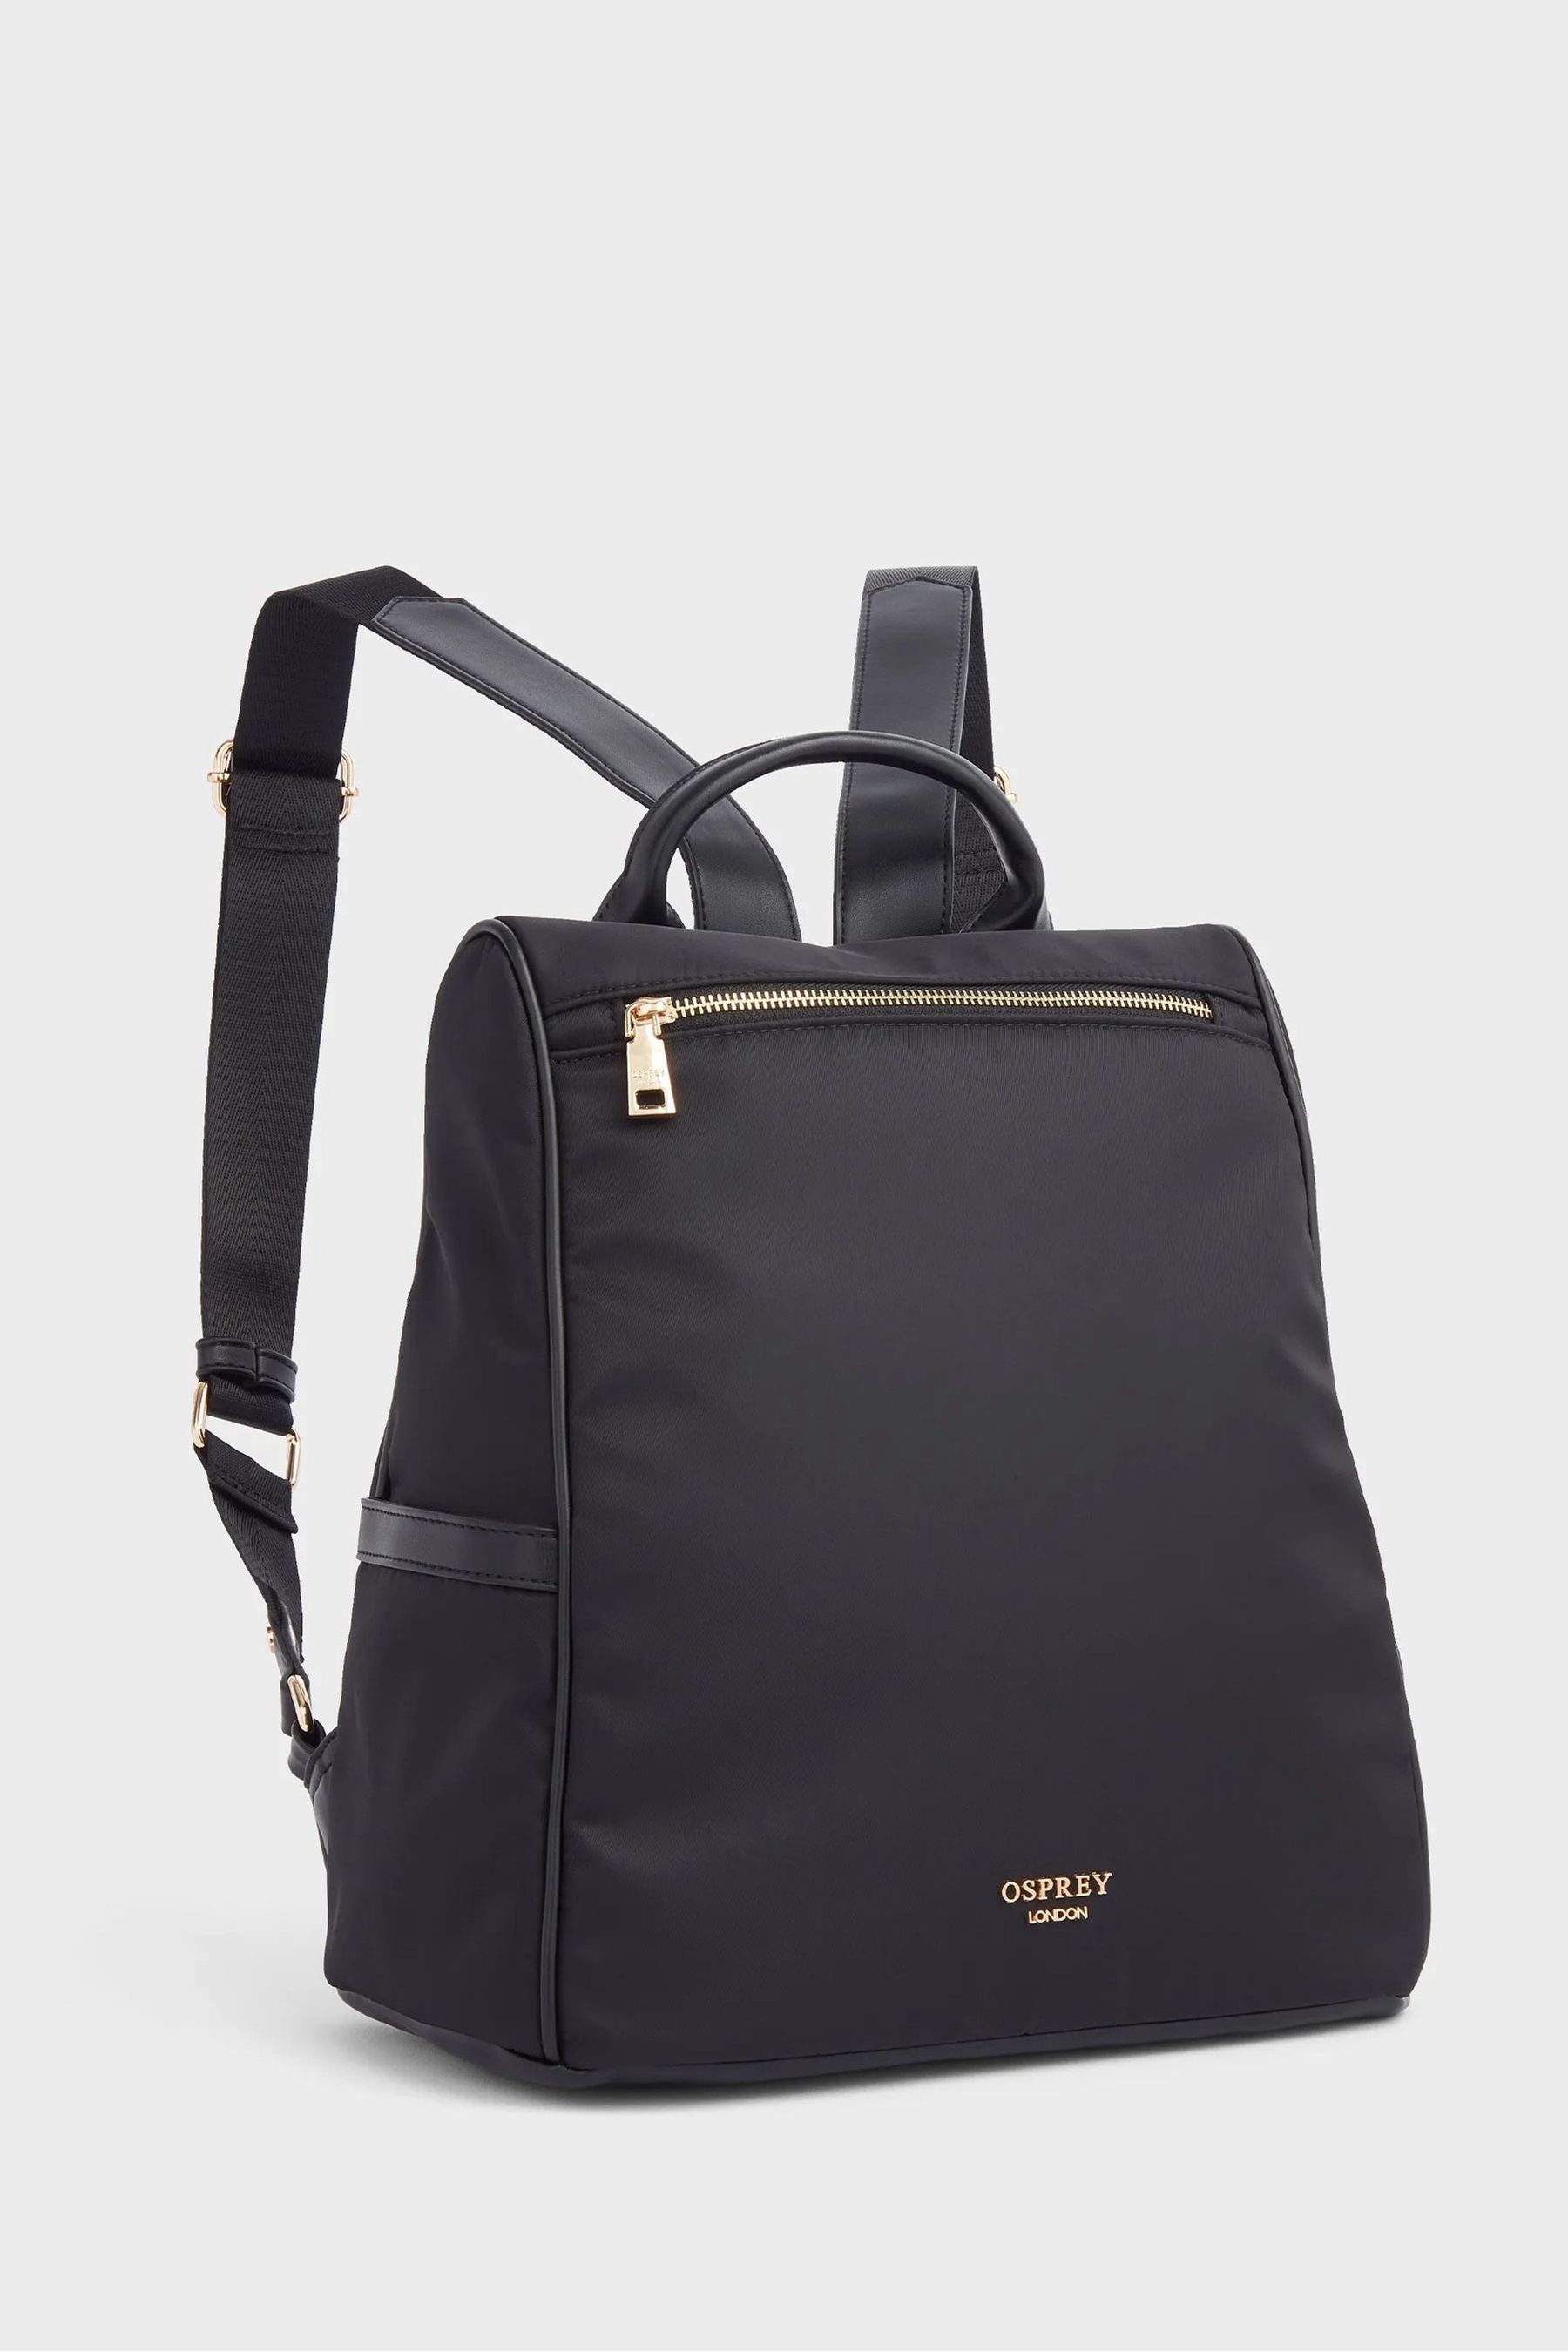 Buy OSPREY LONDON The Wanderer Nylon Backpack from the Next UK online shop